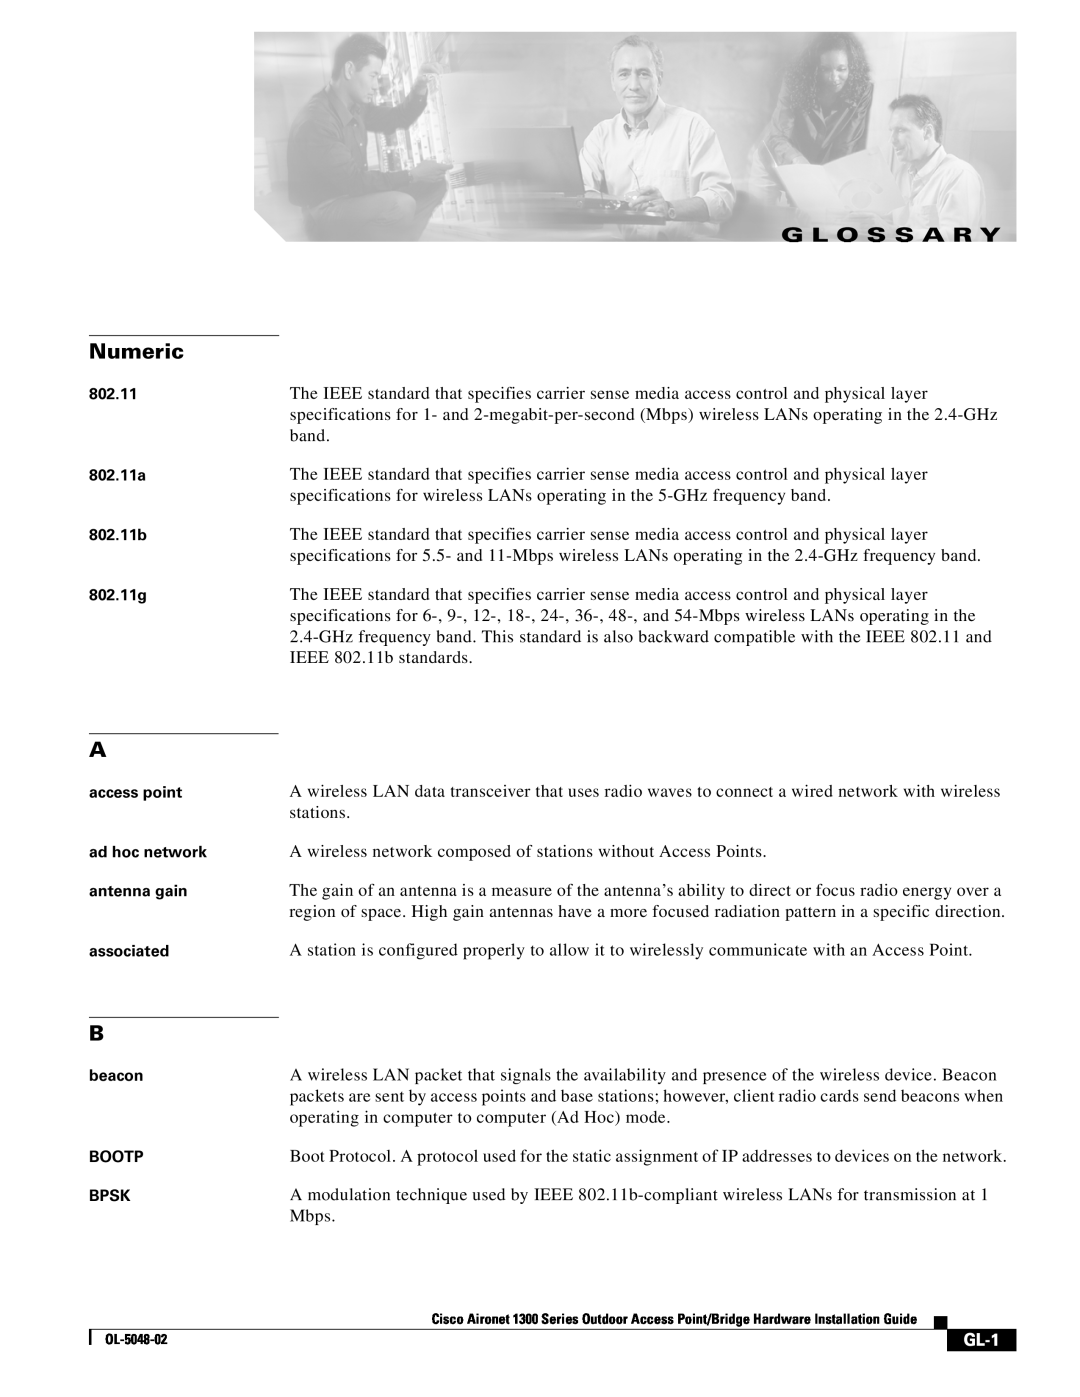 Cisco Systems 1300 Series manual Numeric, G L O S S A R Y, GL-1 